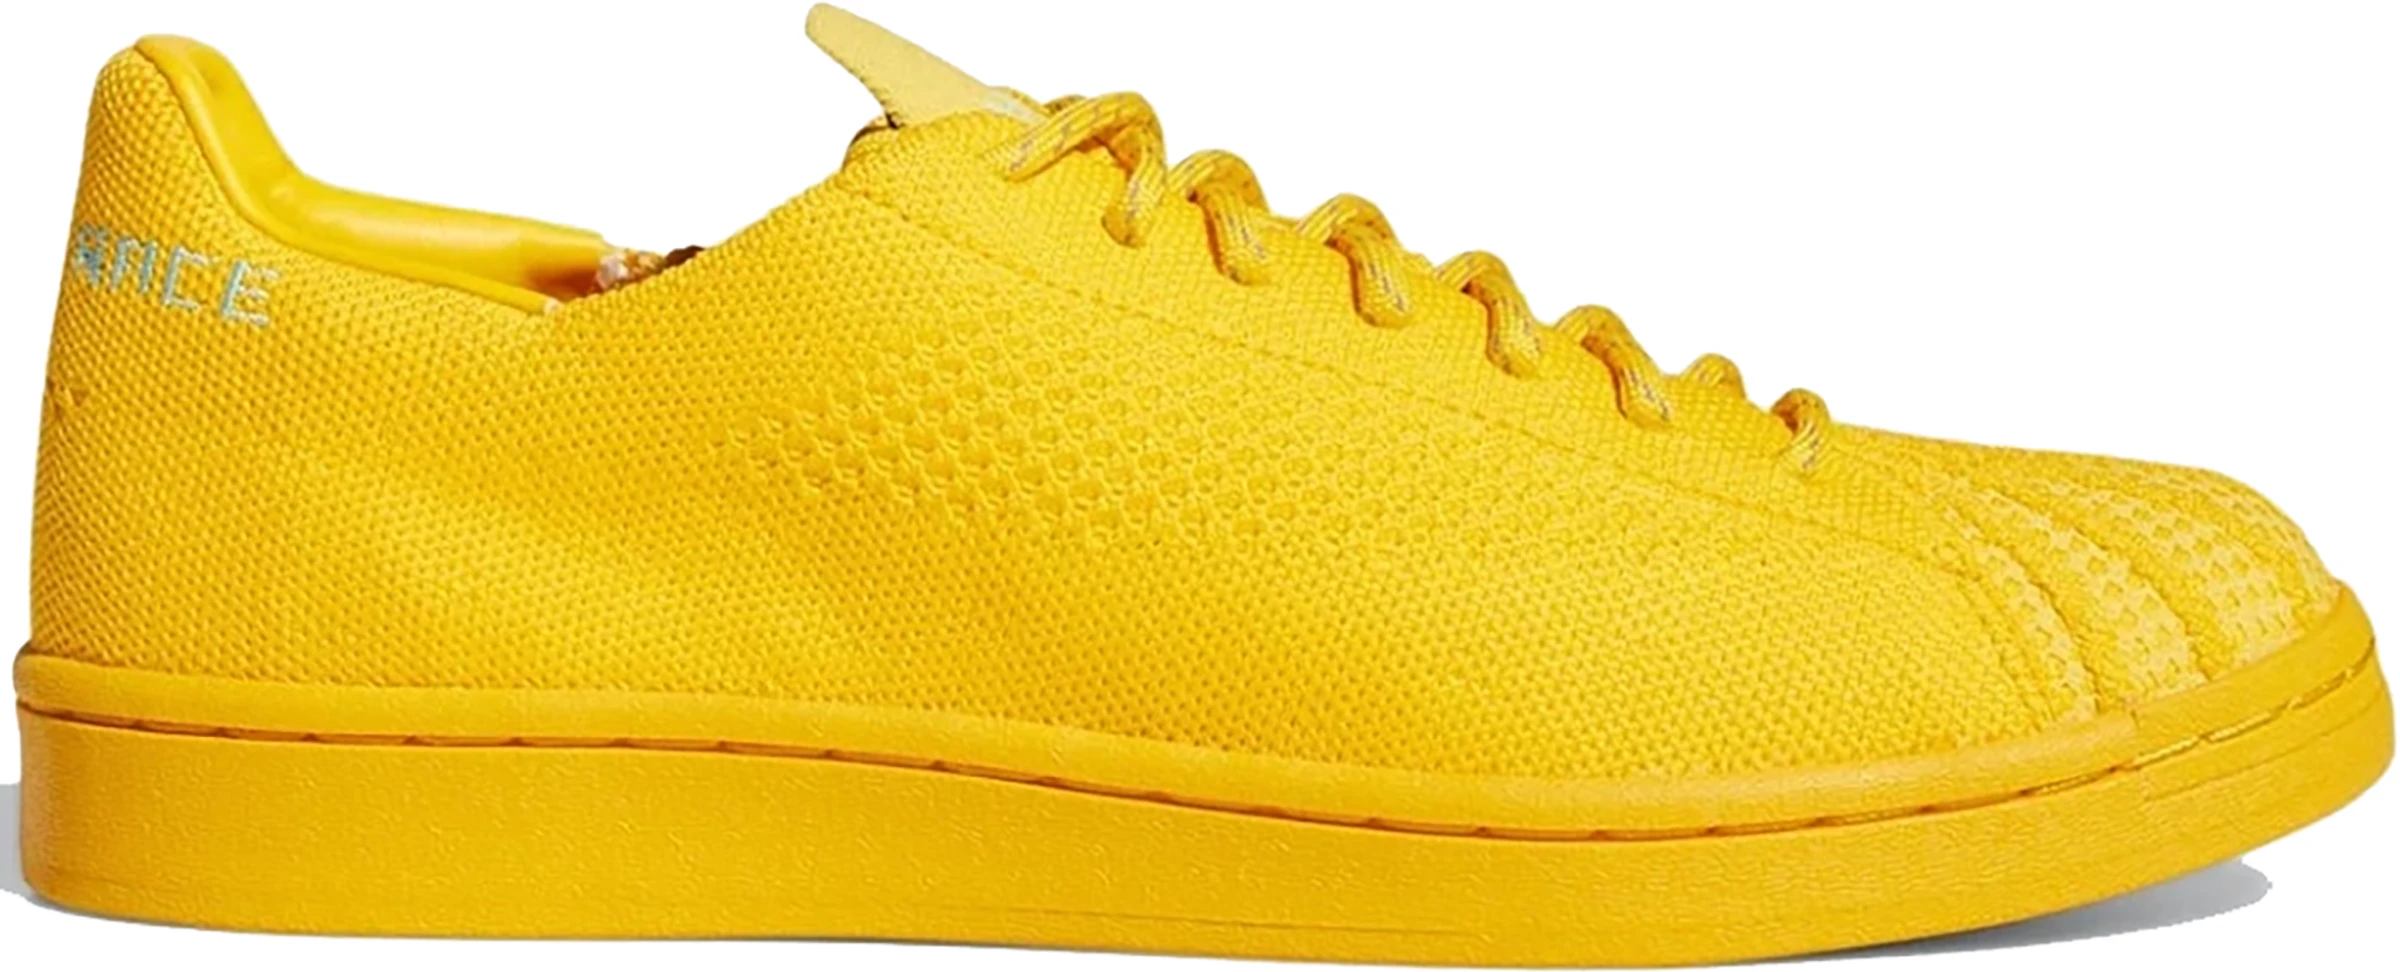 freno Falsedad Torpe adidas Superstar Primeknit Pharrell Yellow - S42930 - ES